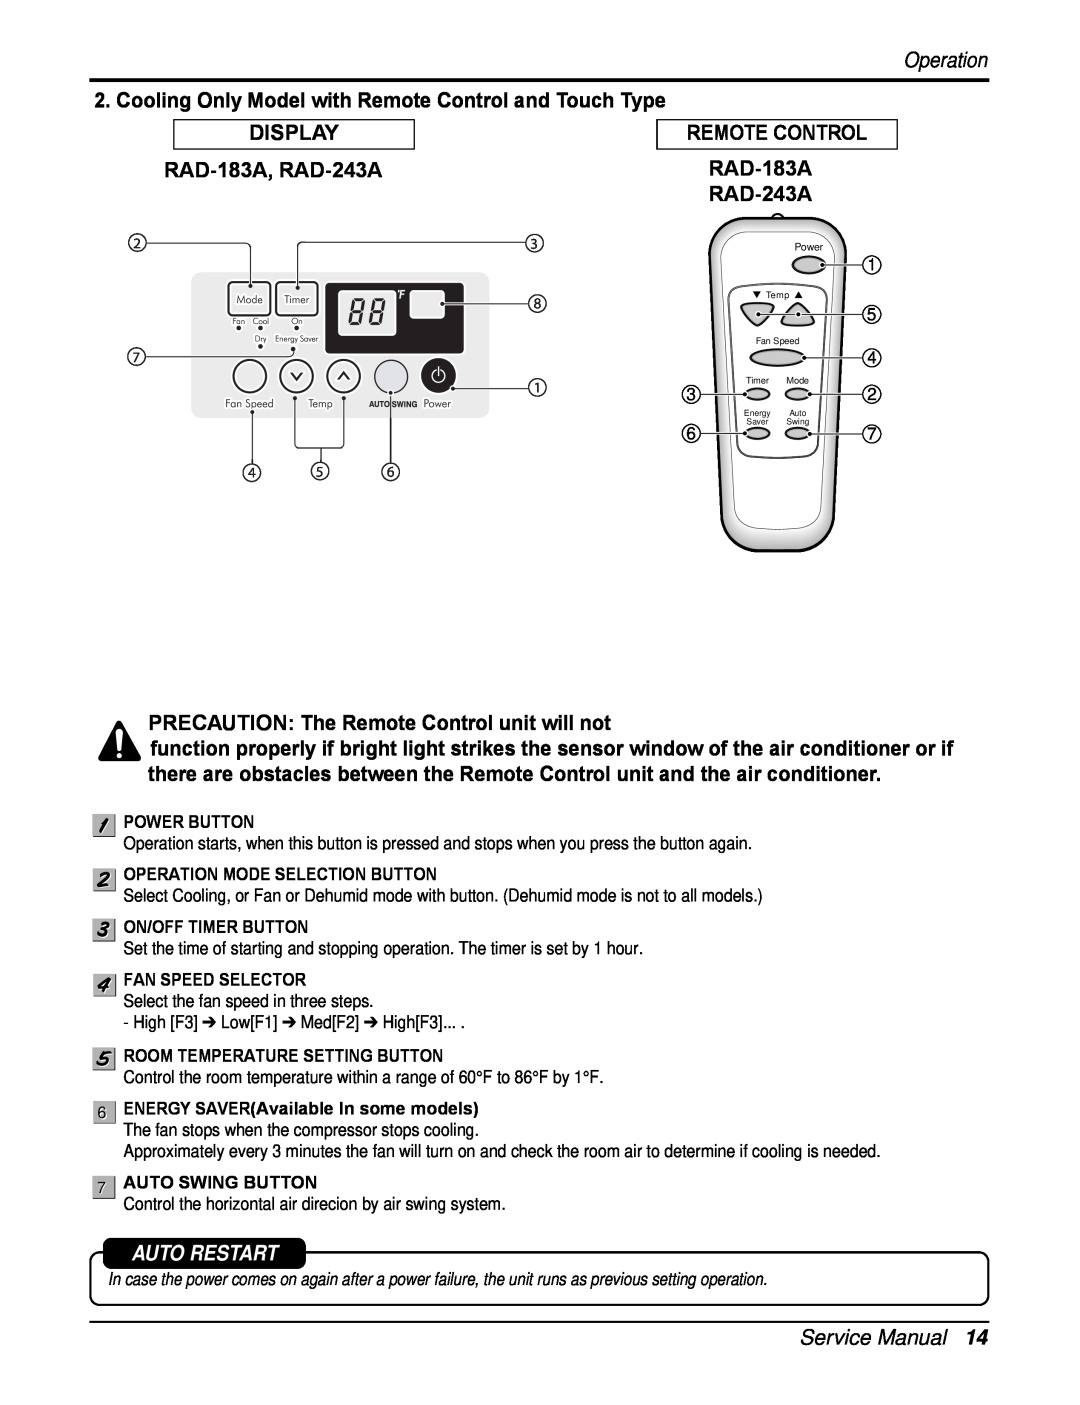 Heat Controller Display, RAD-183A, RAD-243A, PRECAUTION The Remote Control unit will not, Operation, Auto Restart 